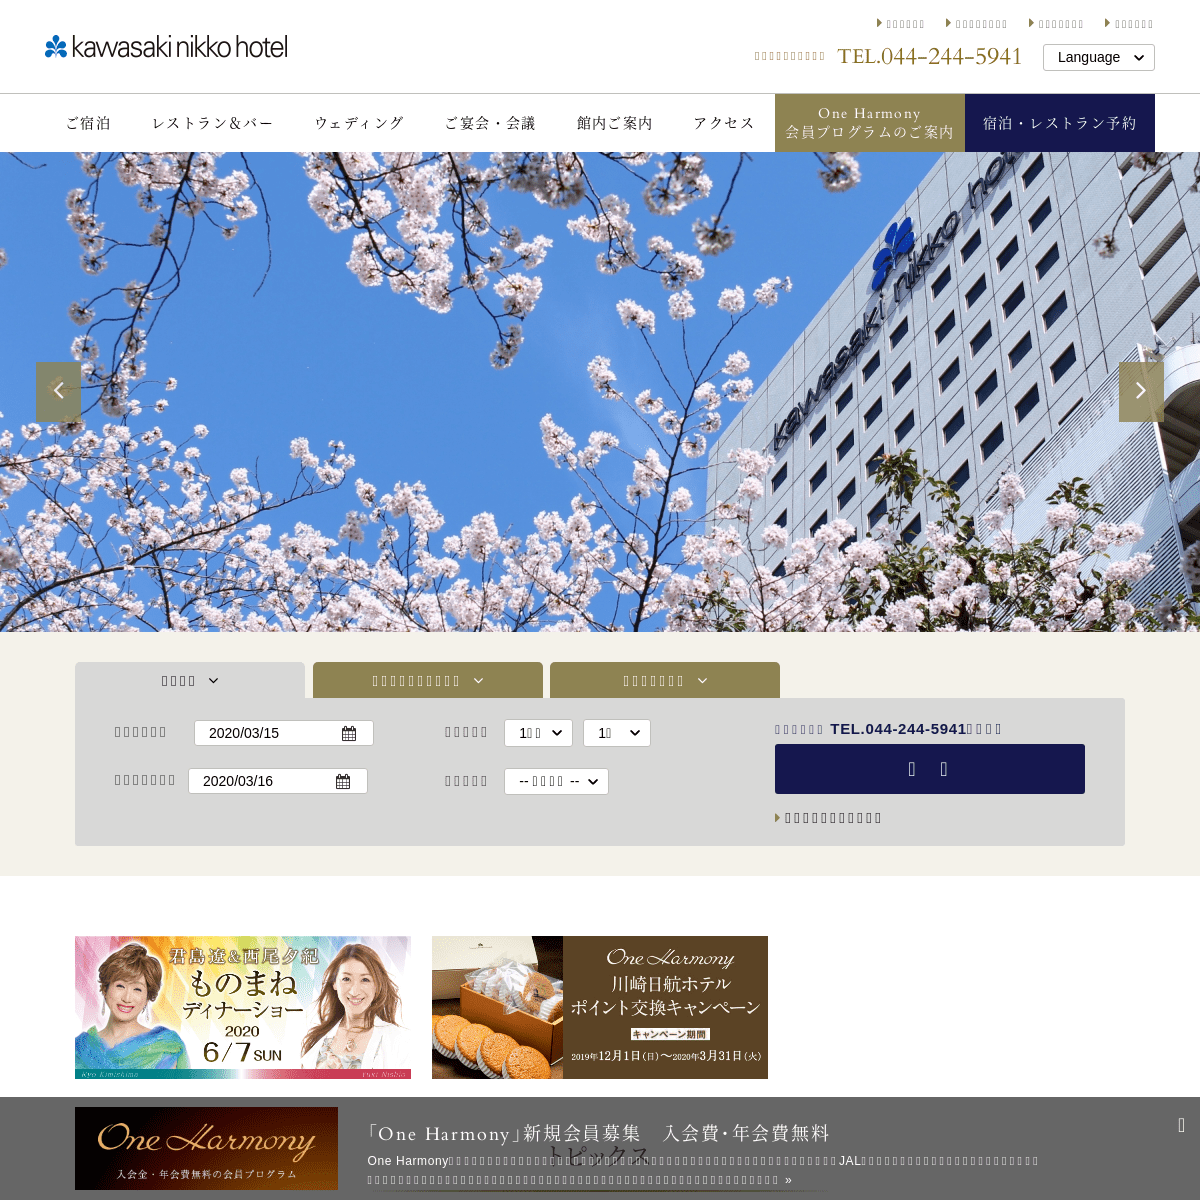 A complete backup of kawasaki-nikko-hotel.com